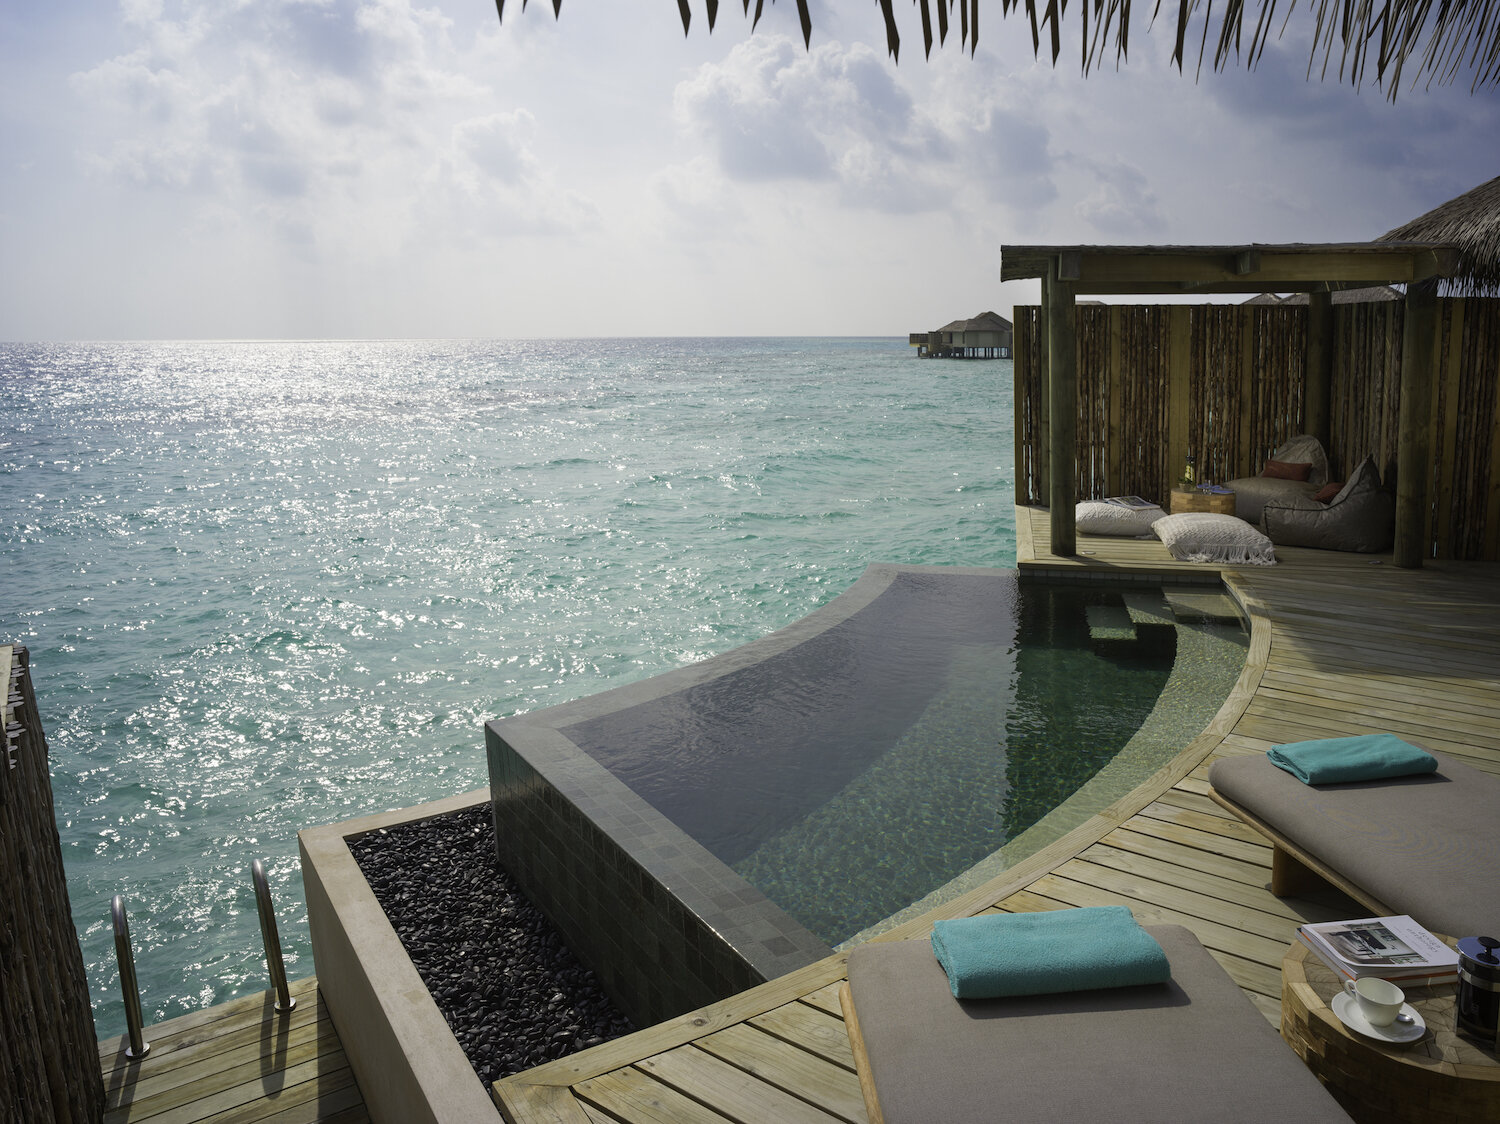 InterContinental Maldives - Outdoor Pool Deck - Overwater Pool Villa copy.jpg